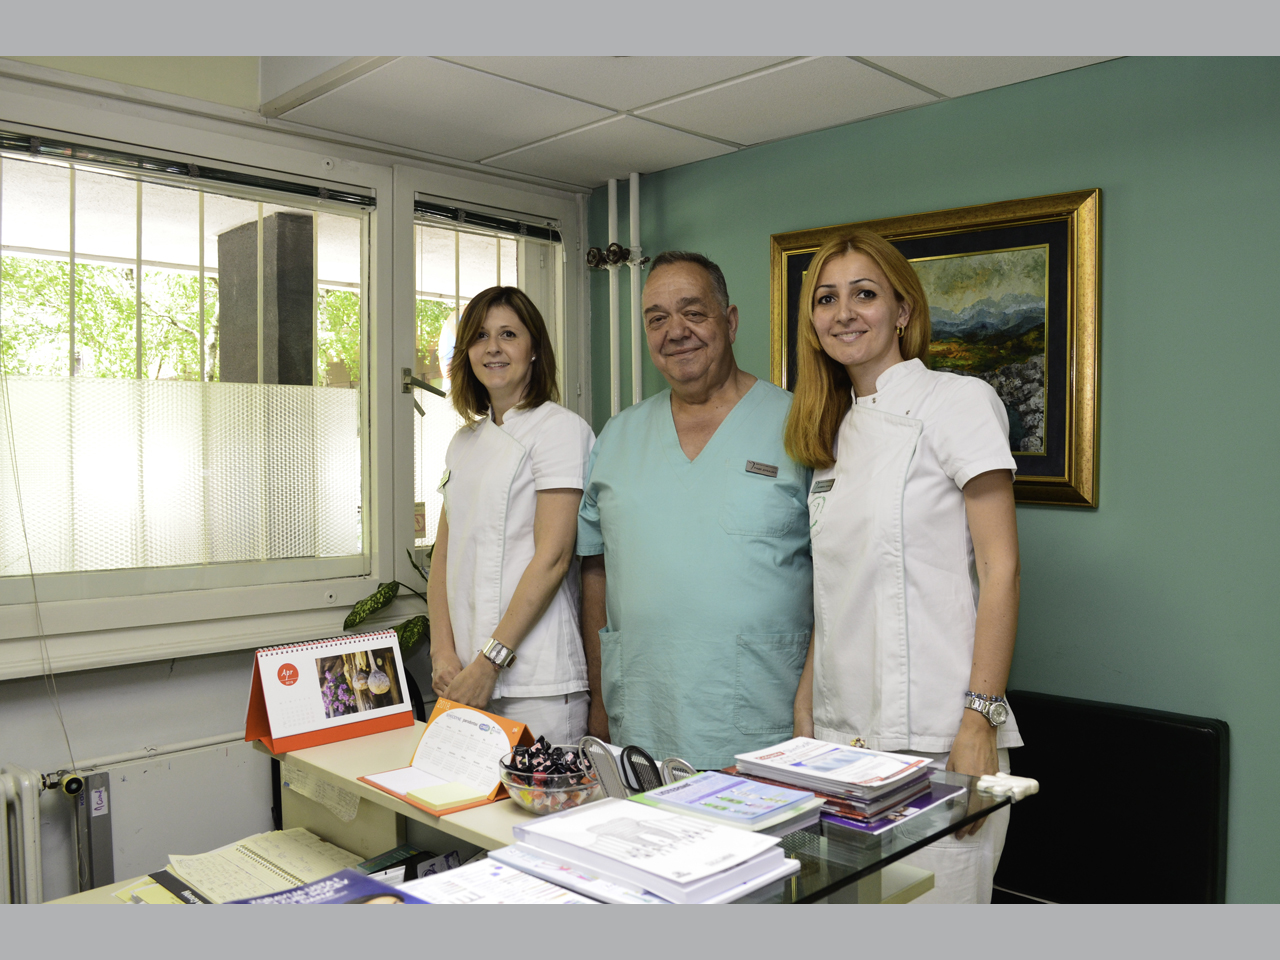 DR DUBAJIC DENTAL ORDINATION Dental surgery Belgrade - Photo 3